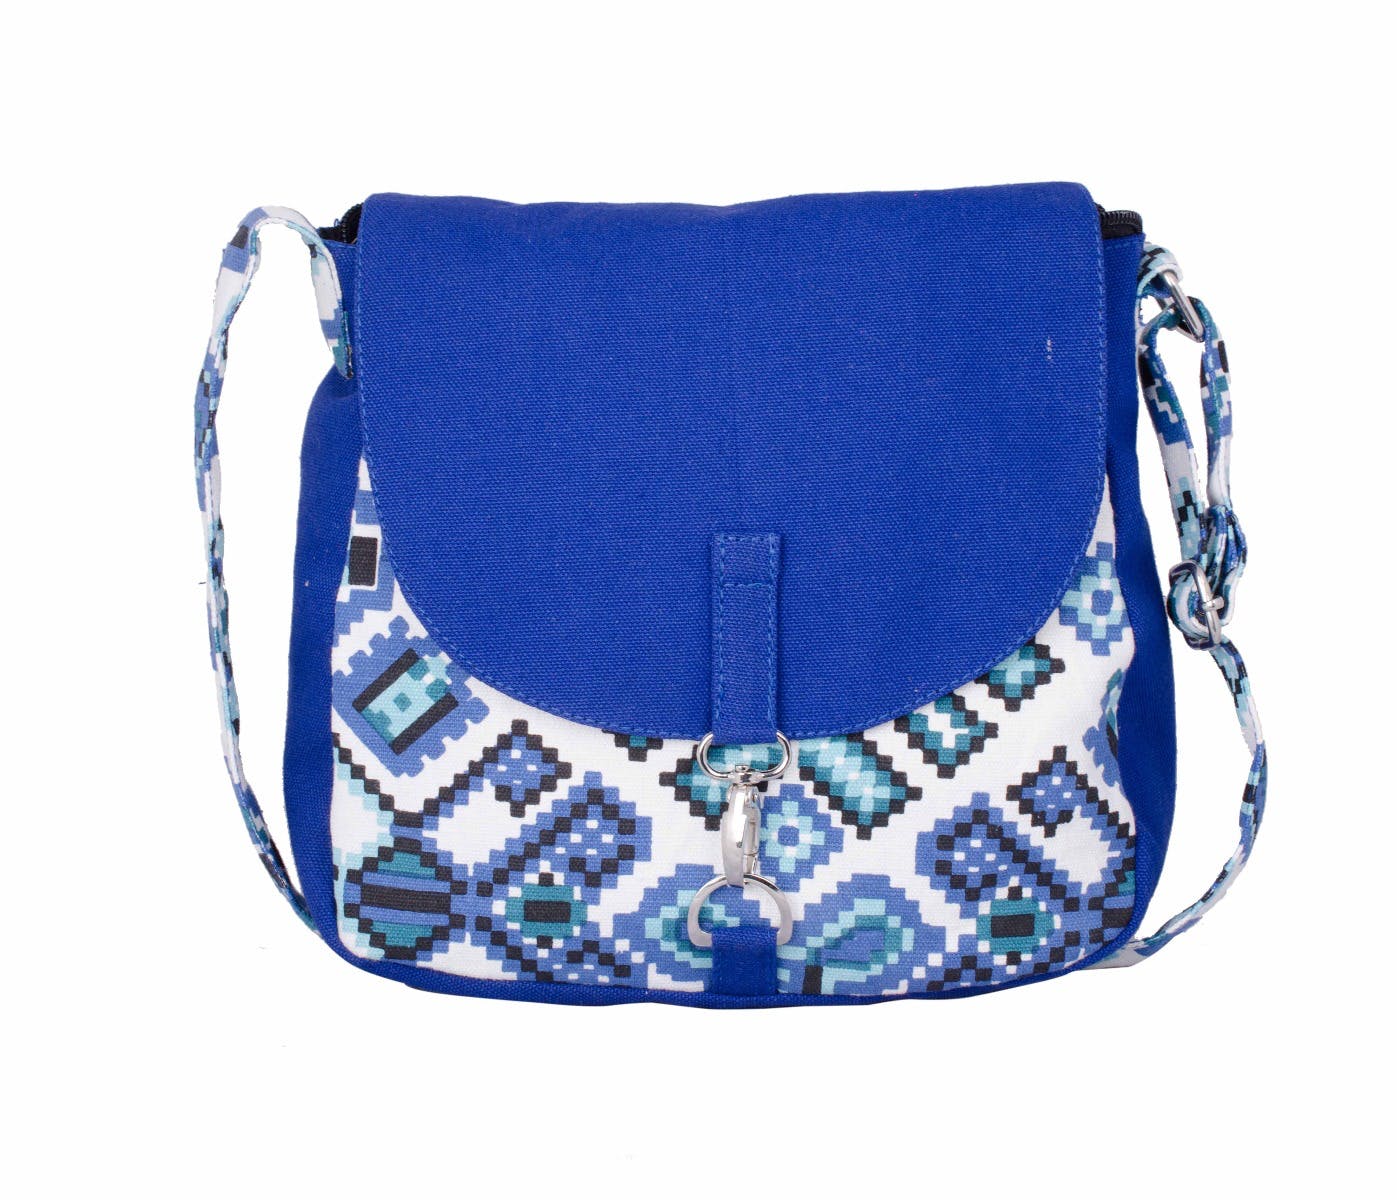 Nine West Crossbody Blue Bags & Handbags for Women for sale | eBay